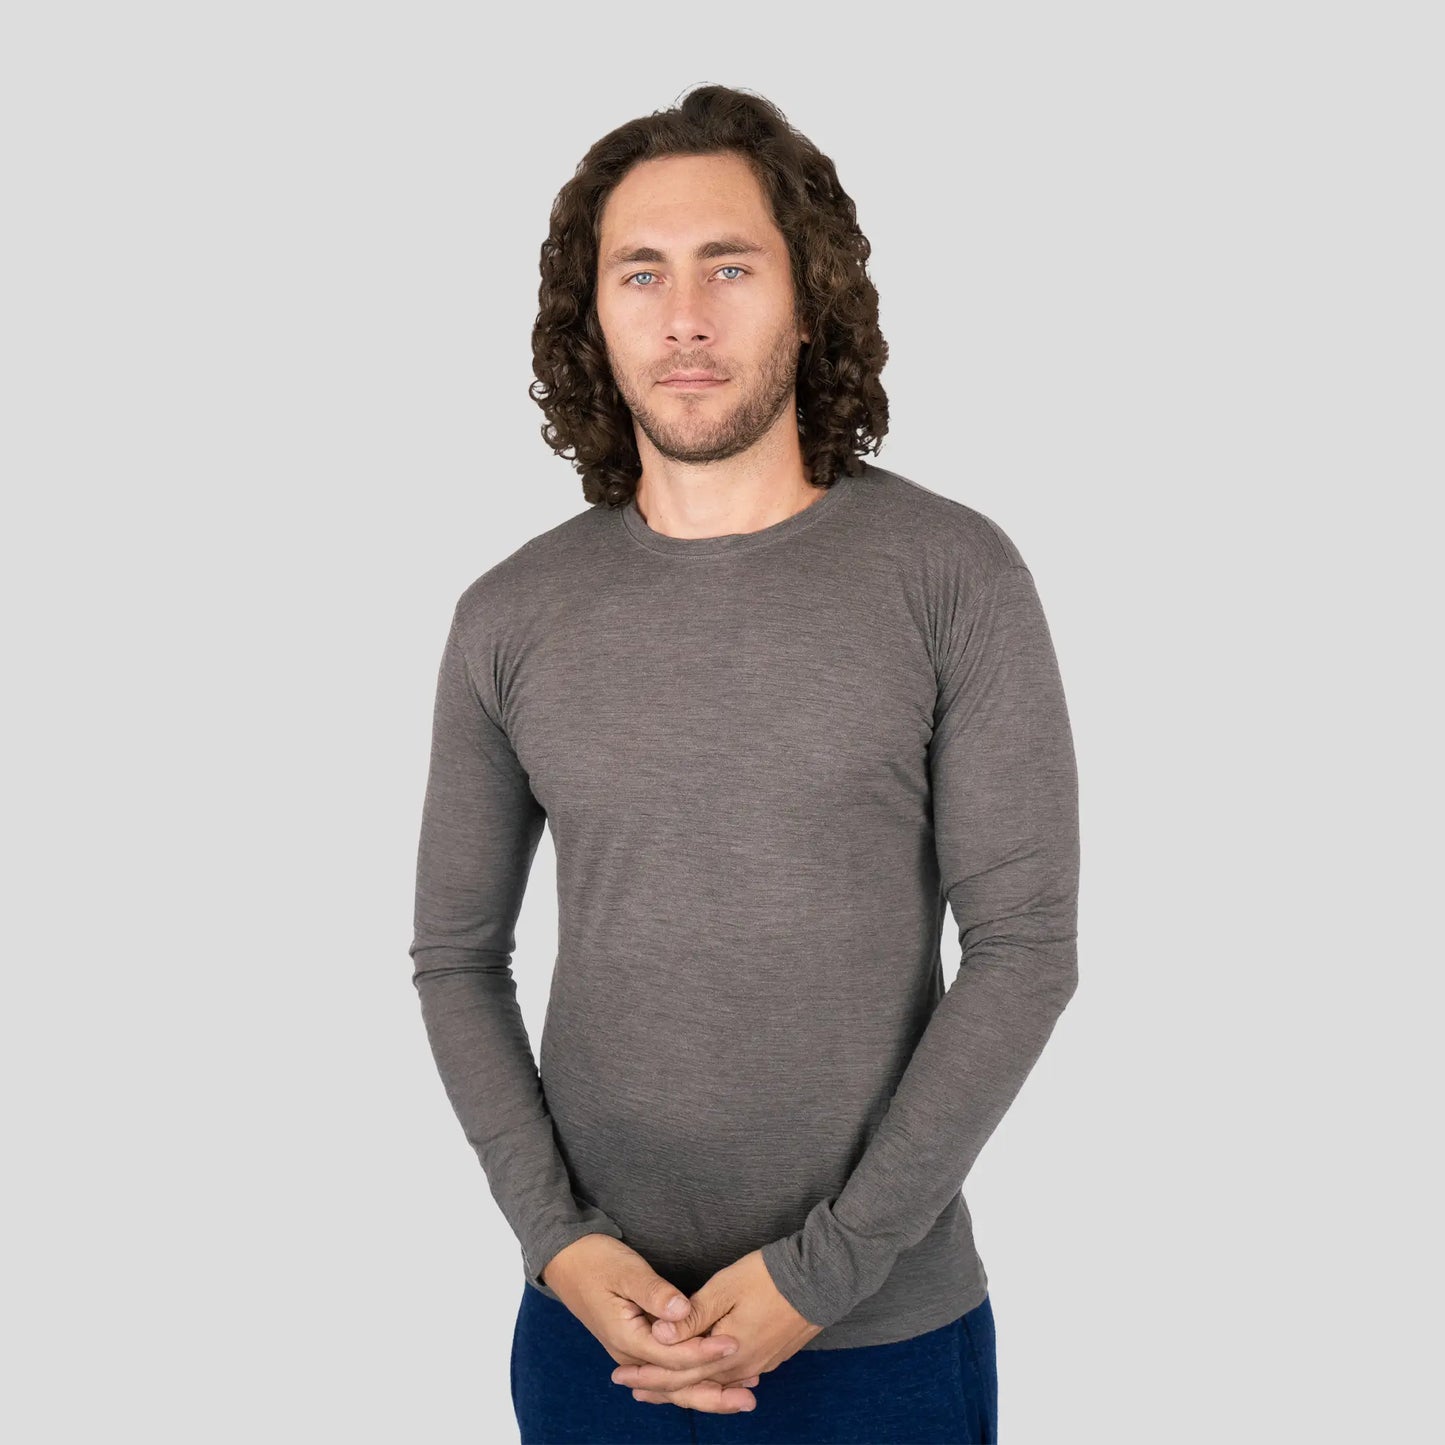 Men's Alpaca Wool Long Sleeve Shirt: 160 Ultralight color natural gray